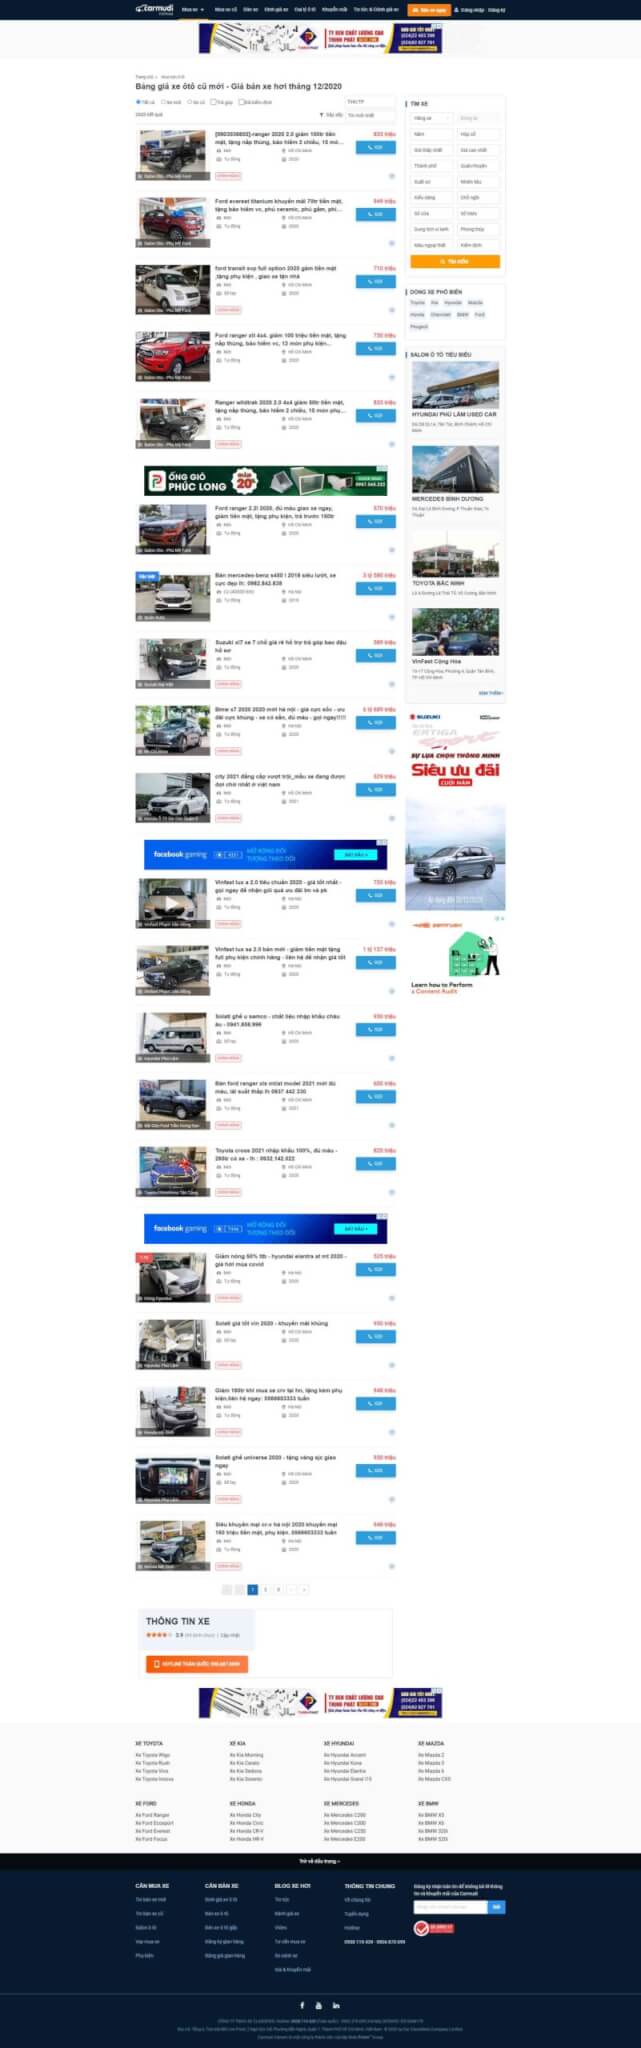 3.Các module cơ bản trên website kinh doanh xe ô tô cũ